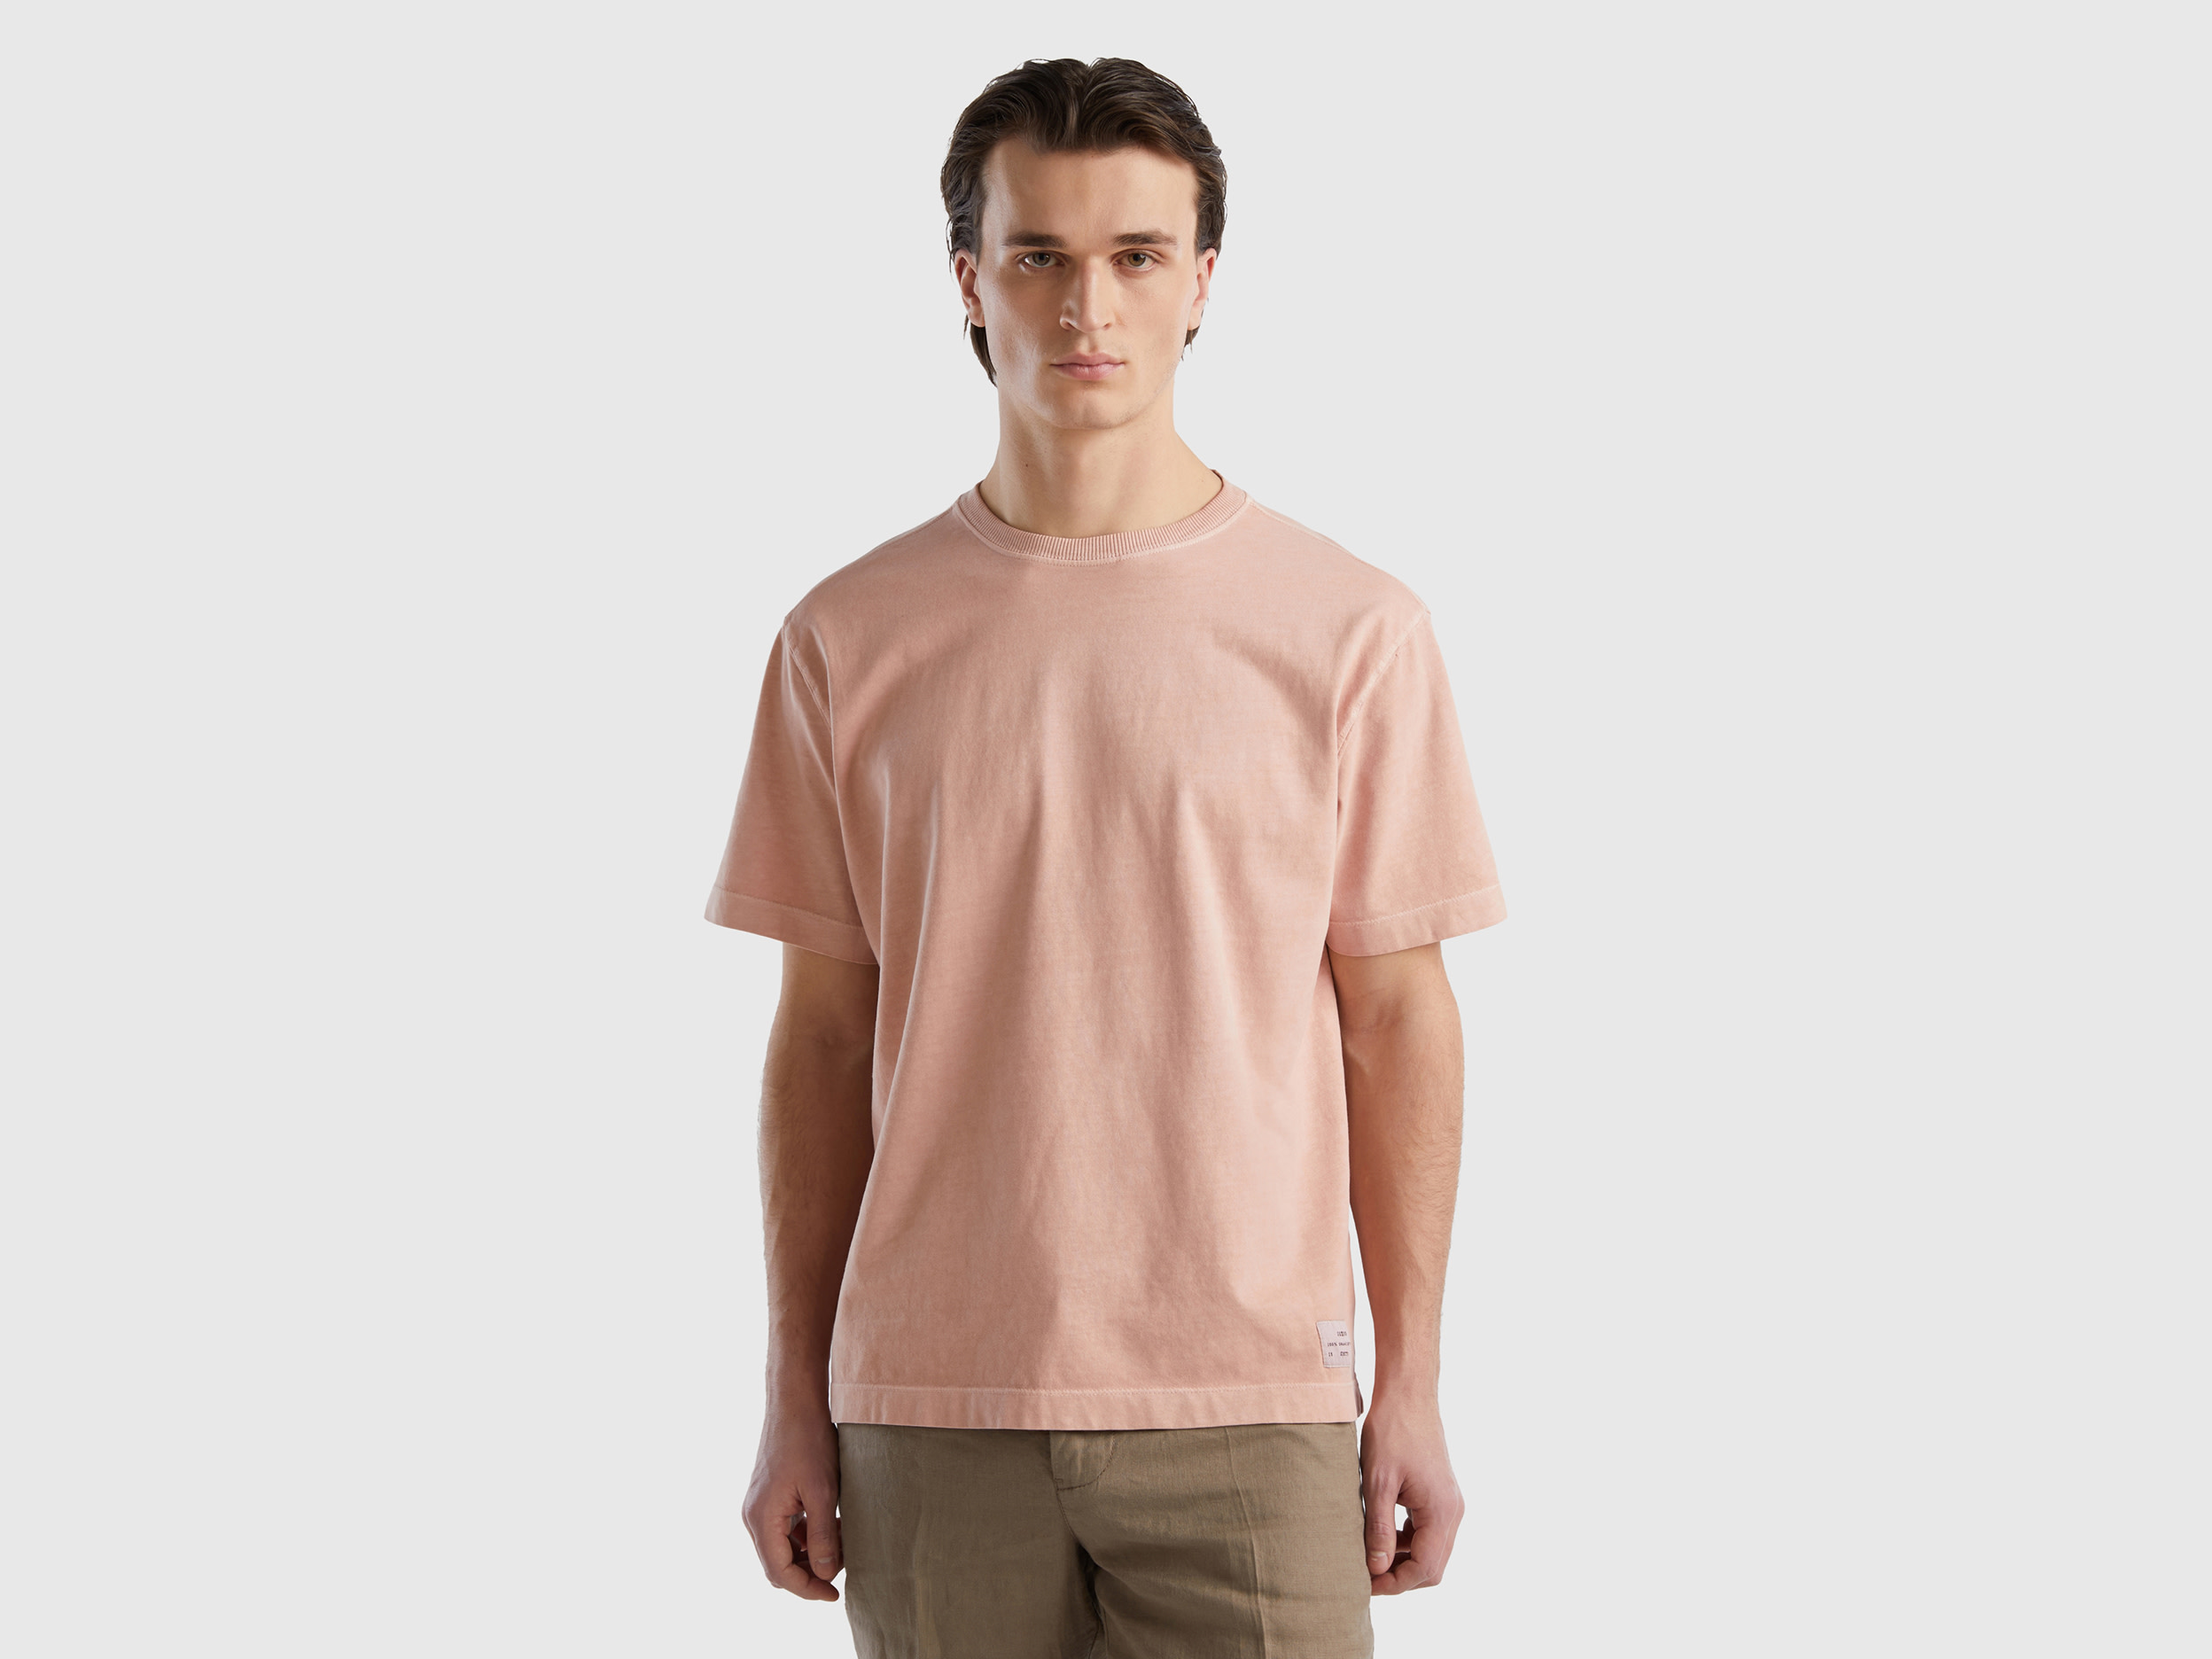 Image of Benetton, 100% Organic Cotton Crew Neck T-shirt, size XXL, Nude, Men